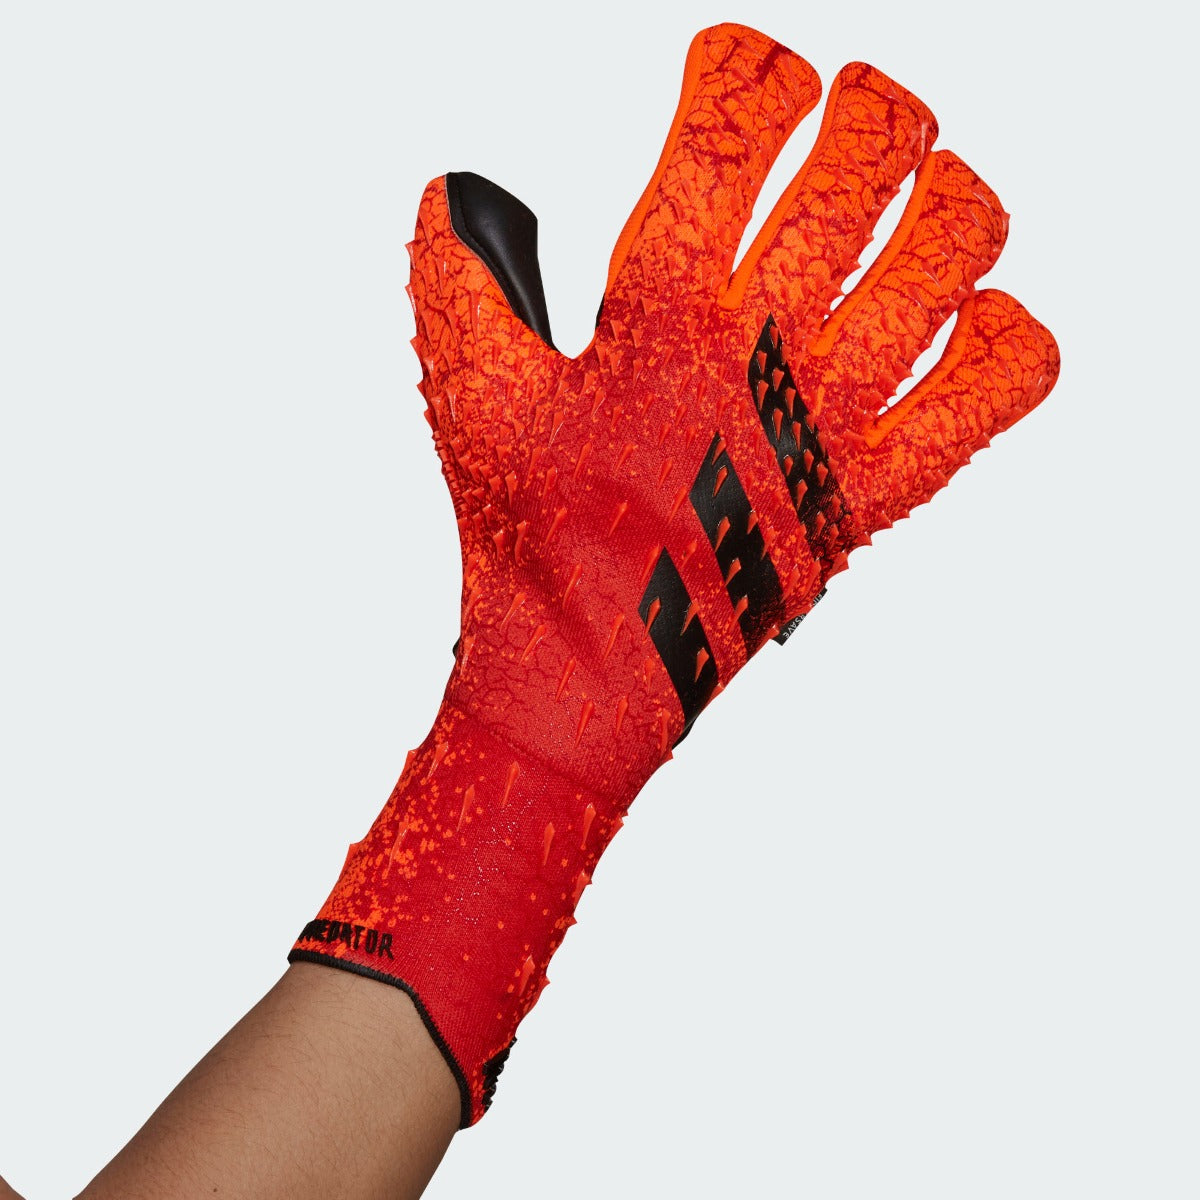 Adidas Predator Pro Fingersave Goalkeeper Gloves - Red-Black (Single - Outer)